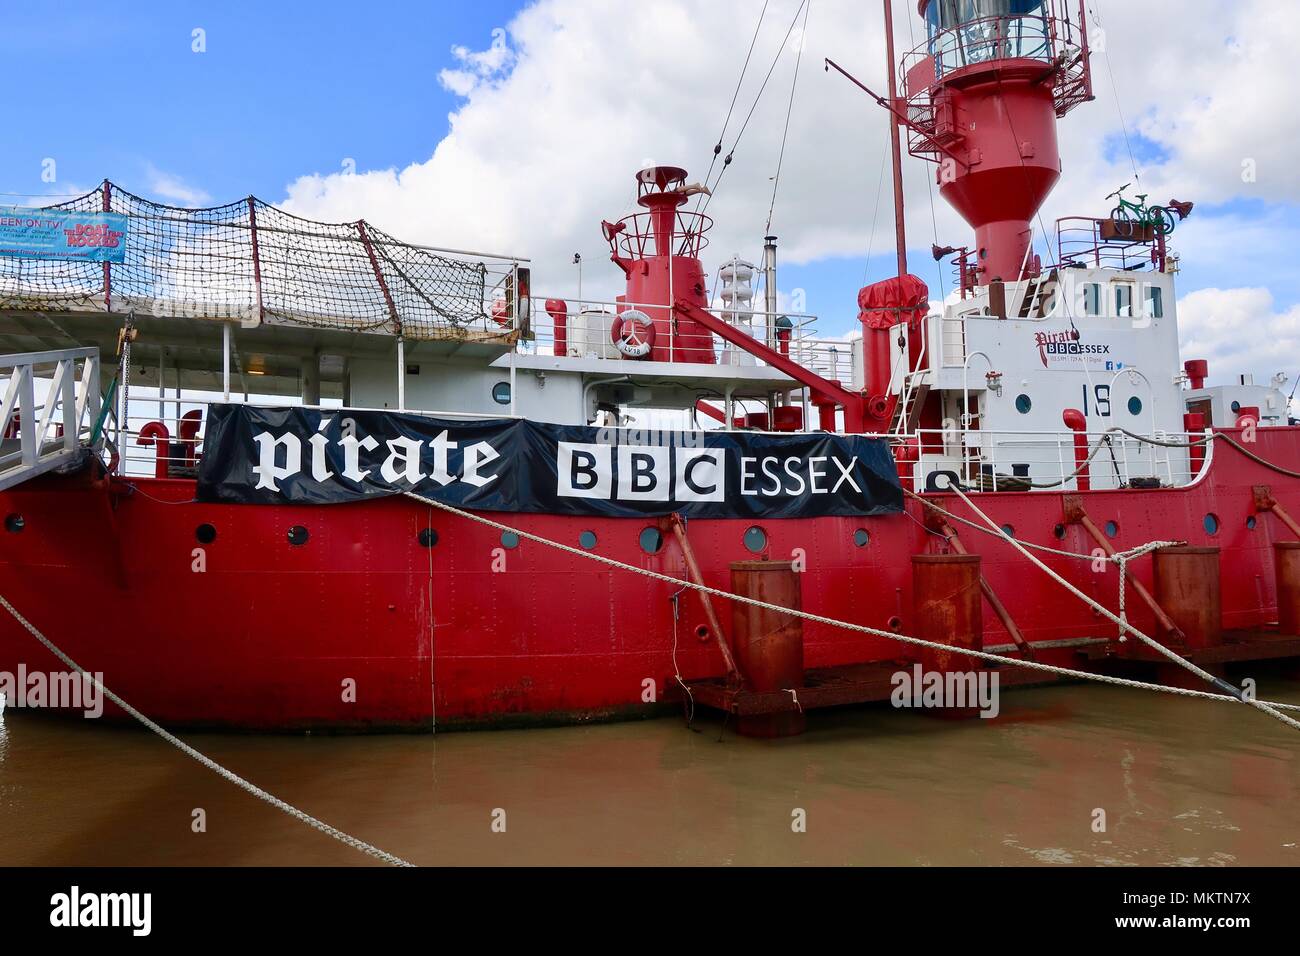 LV 18 Das Boot schaukelte. Radio Caroline Pirate radio Schiff im Dock,  Ha'penny Pier, Harwich, Essex. Mai 2018 Stockfotografie - Alamy